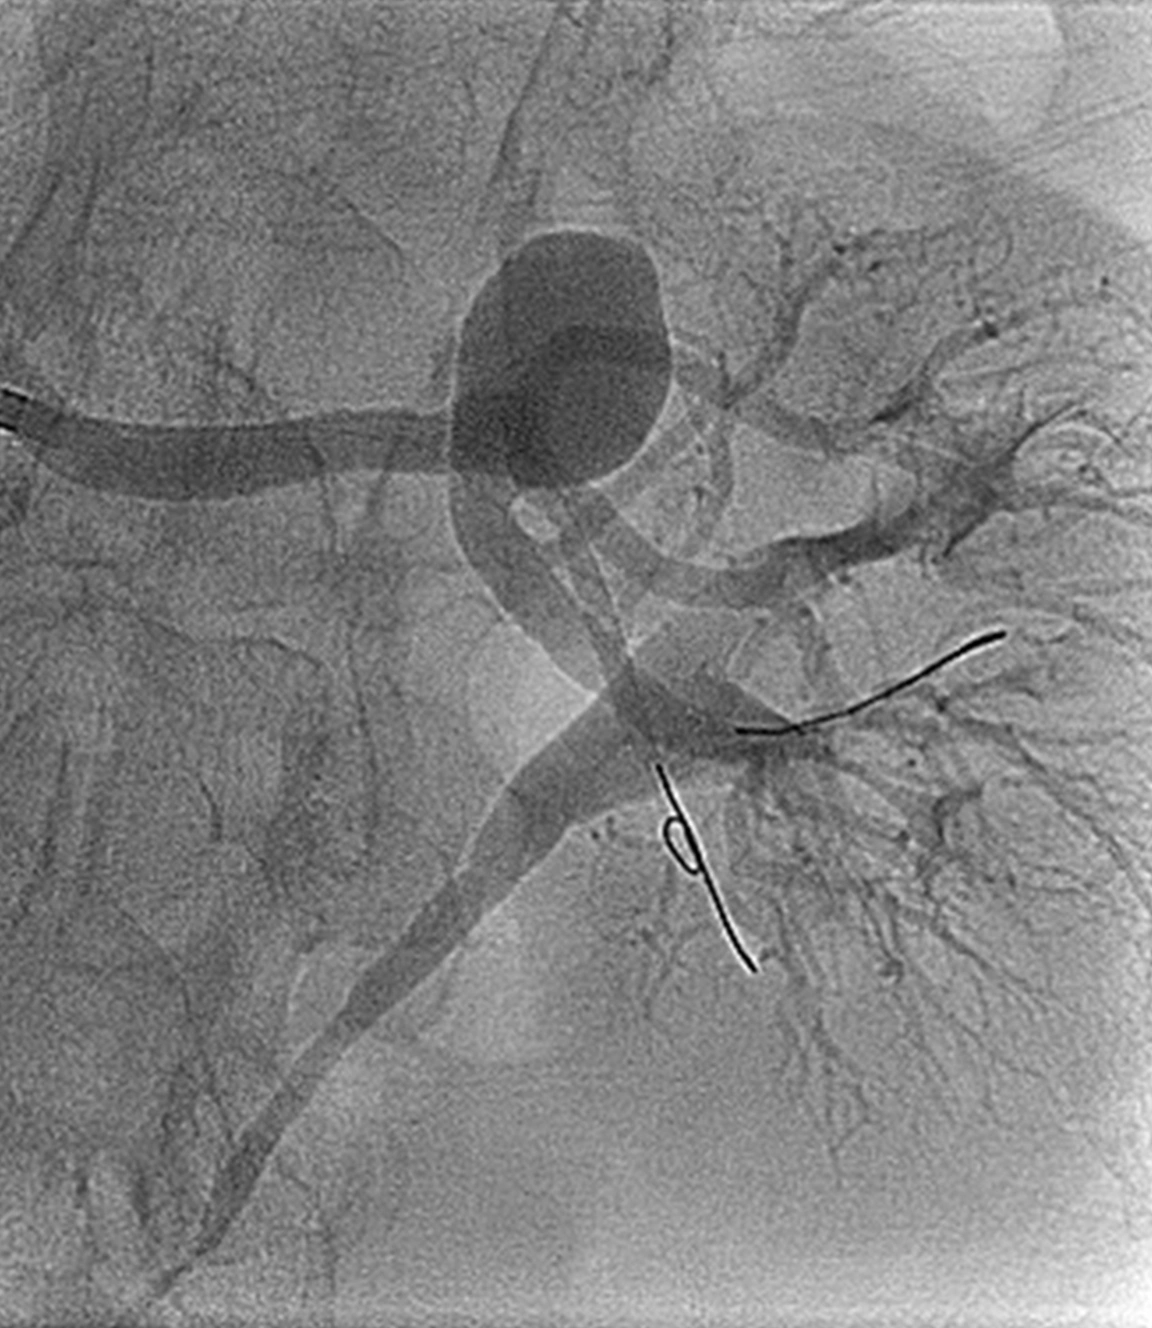 Angiogram of renal artery aneursym